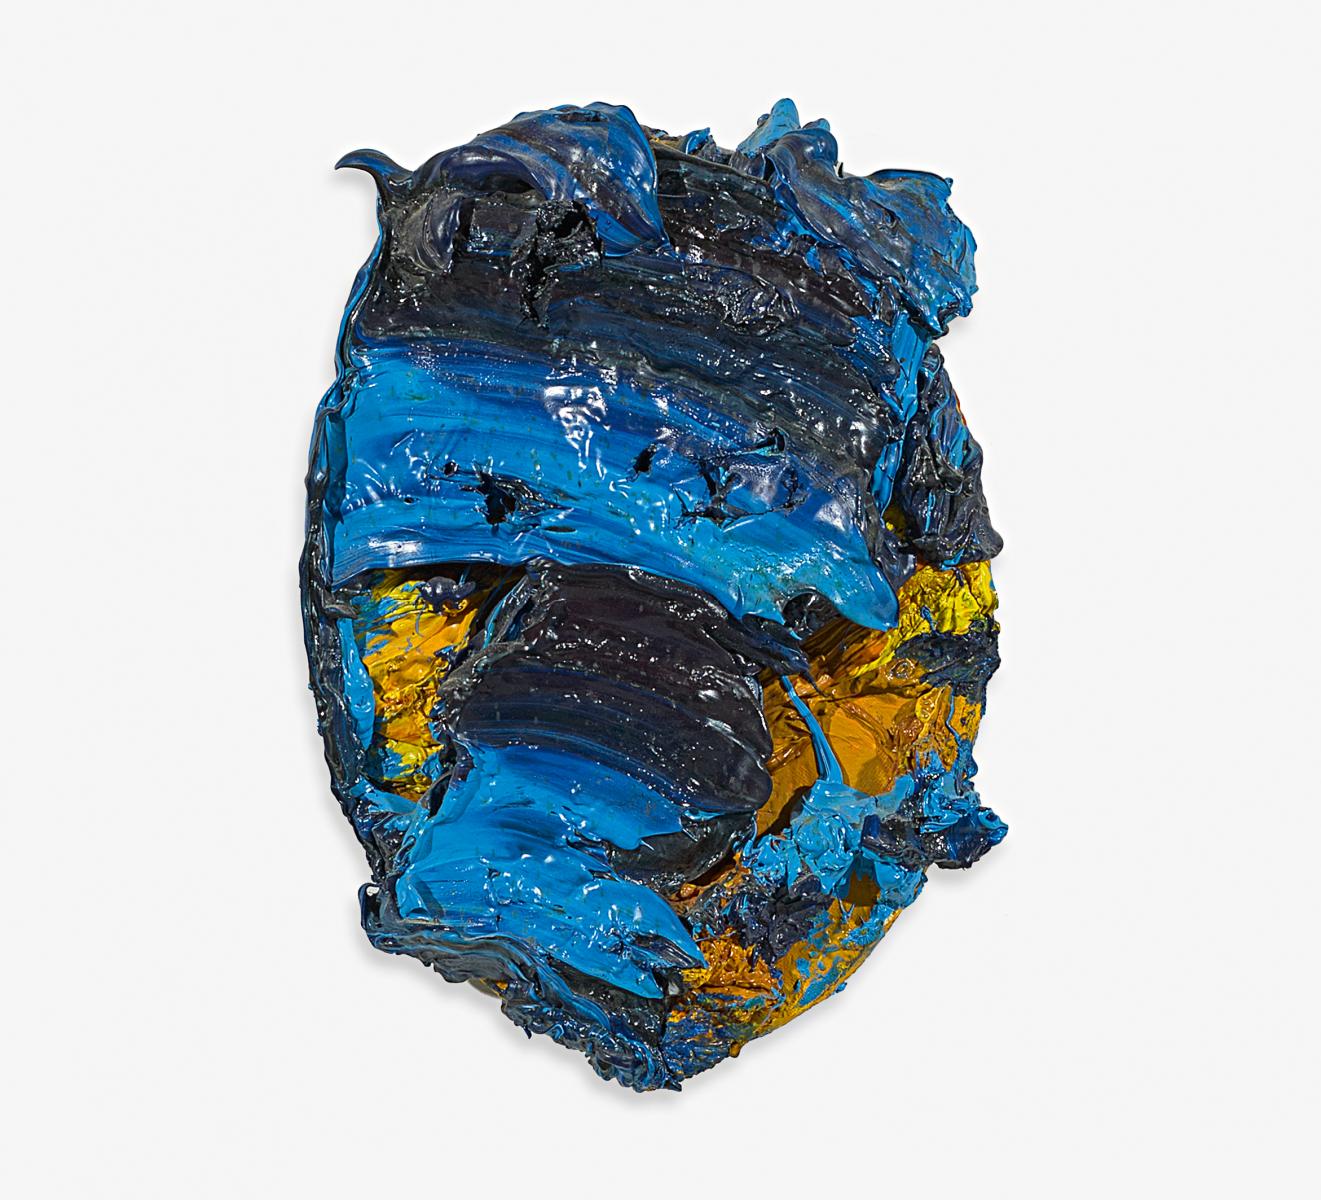 Bernd Schwarzer - Europakopf Gold-Blau, 57985-2, Van Ham Kunstauktionen